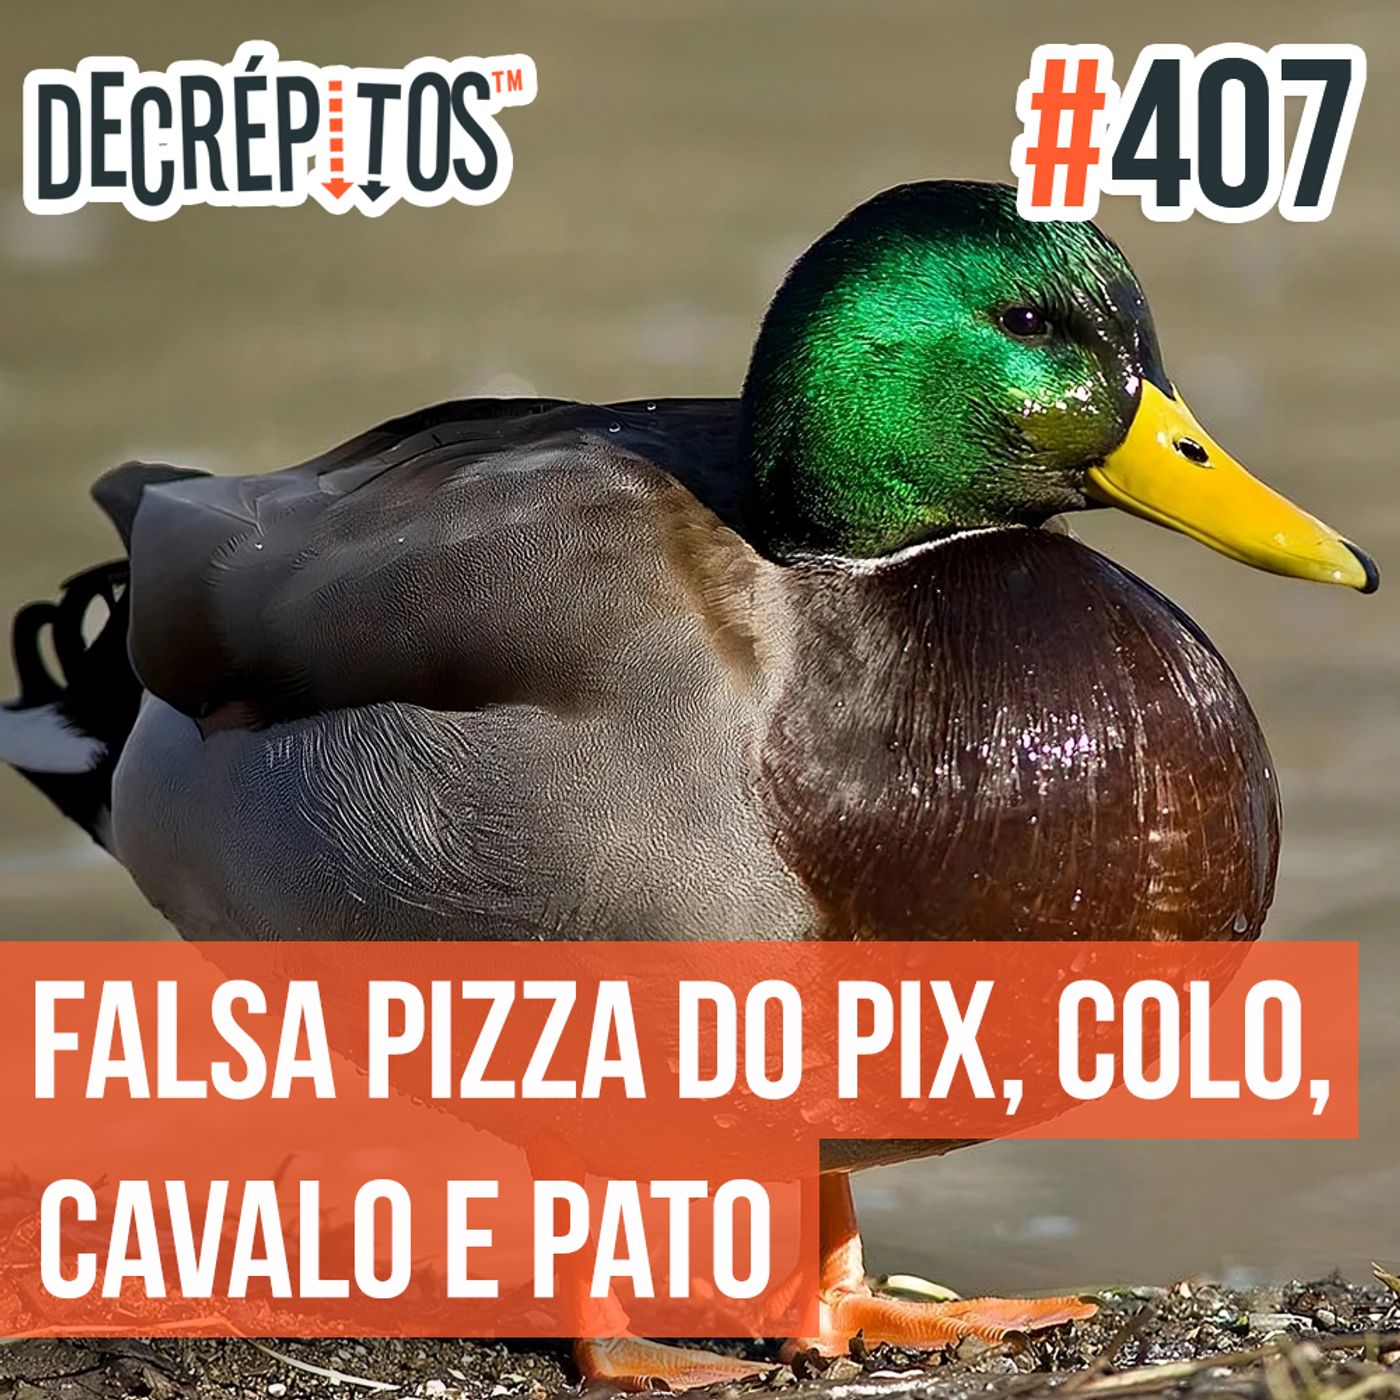 Decrépitos 407 - VACILO NEWS: Falsa pizza do Pix, Colo, Cavalo e Pato Explosivo